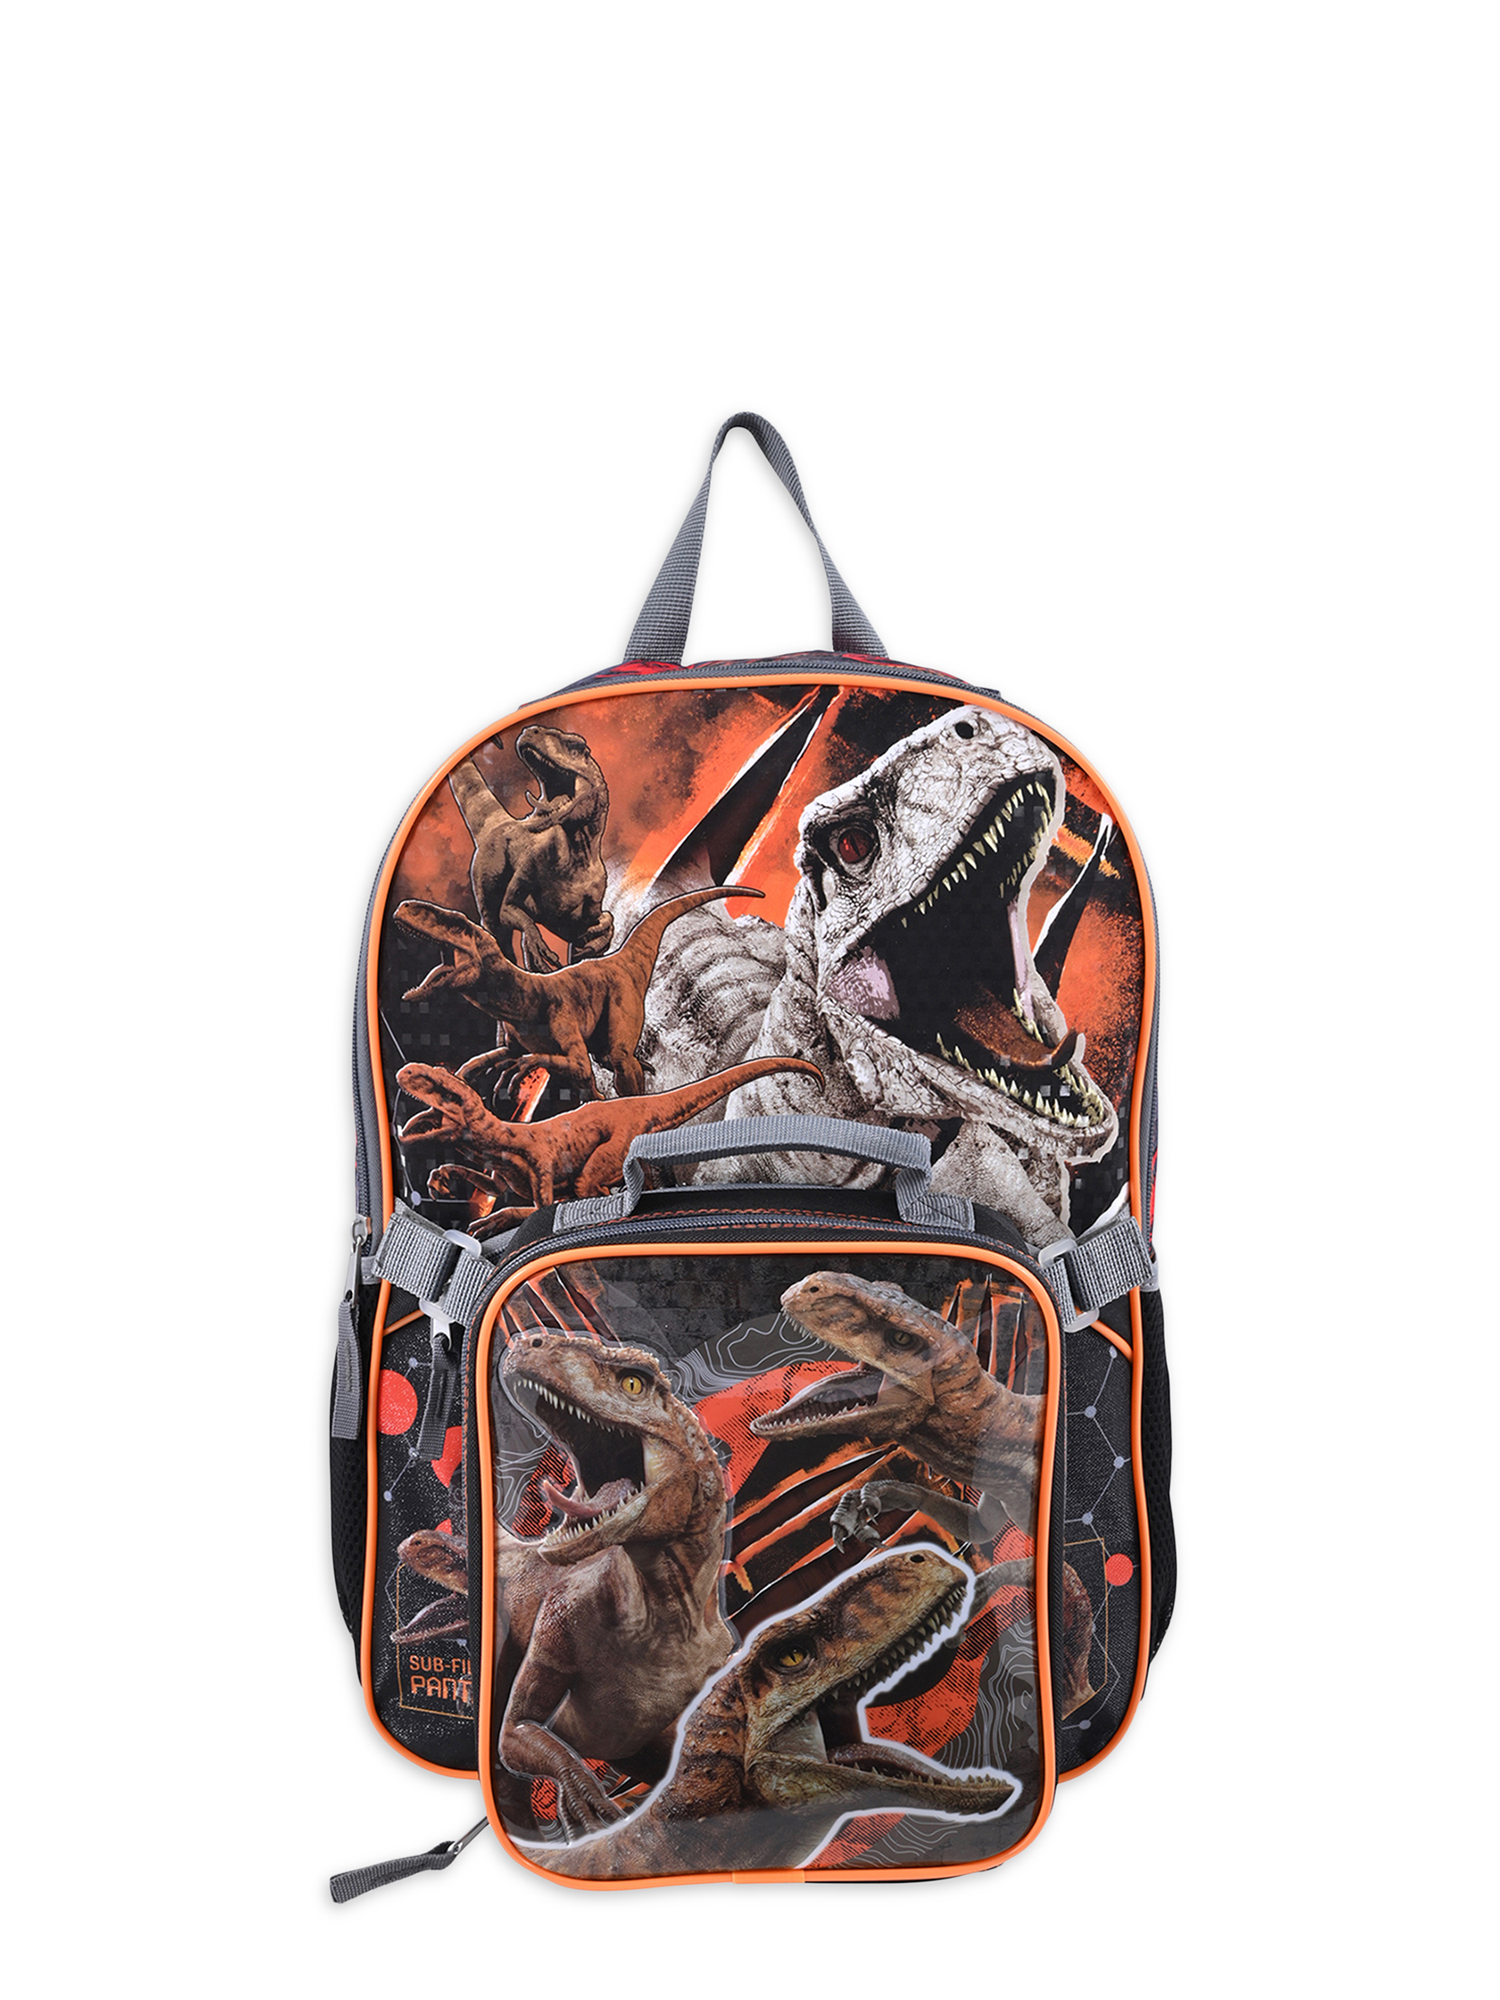 Universal Jurassic World Boys 17" Laptop Backpack 2-Piece Set with Lunch Bag, Black Orange - image 1 of 9